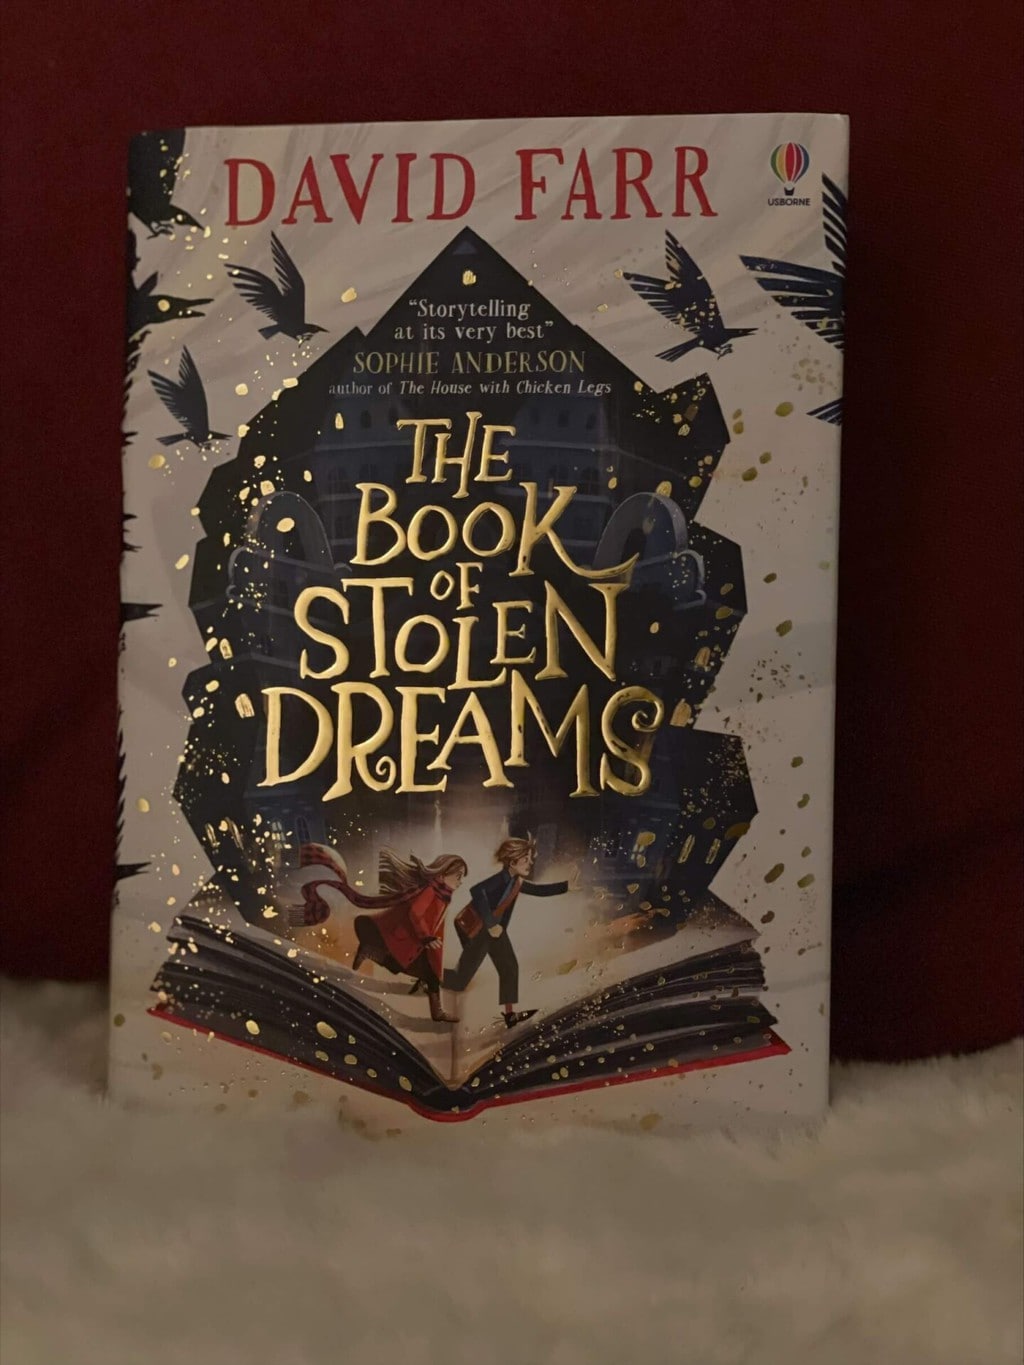 he Book of Stolen Dreams  - David Farr (author), Kristina Kister (illustrator), Usborne Publishing Ltd (publisher), recommended reading age: 9-12 years